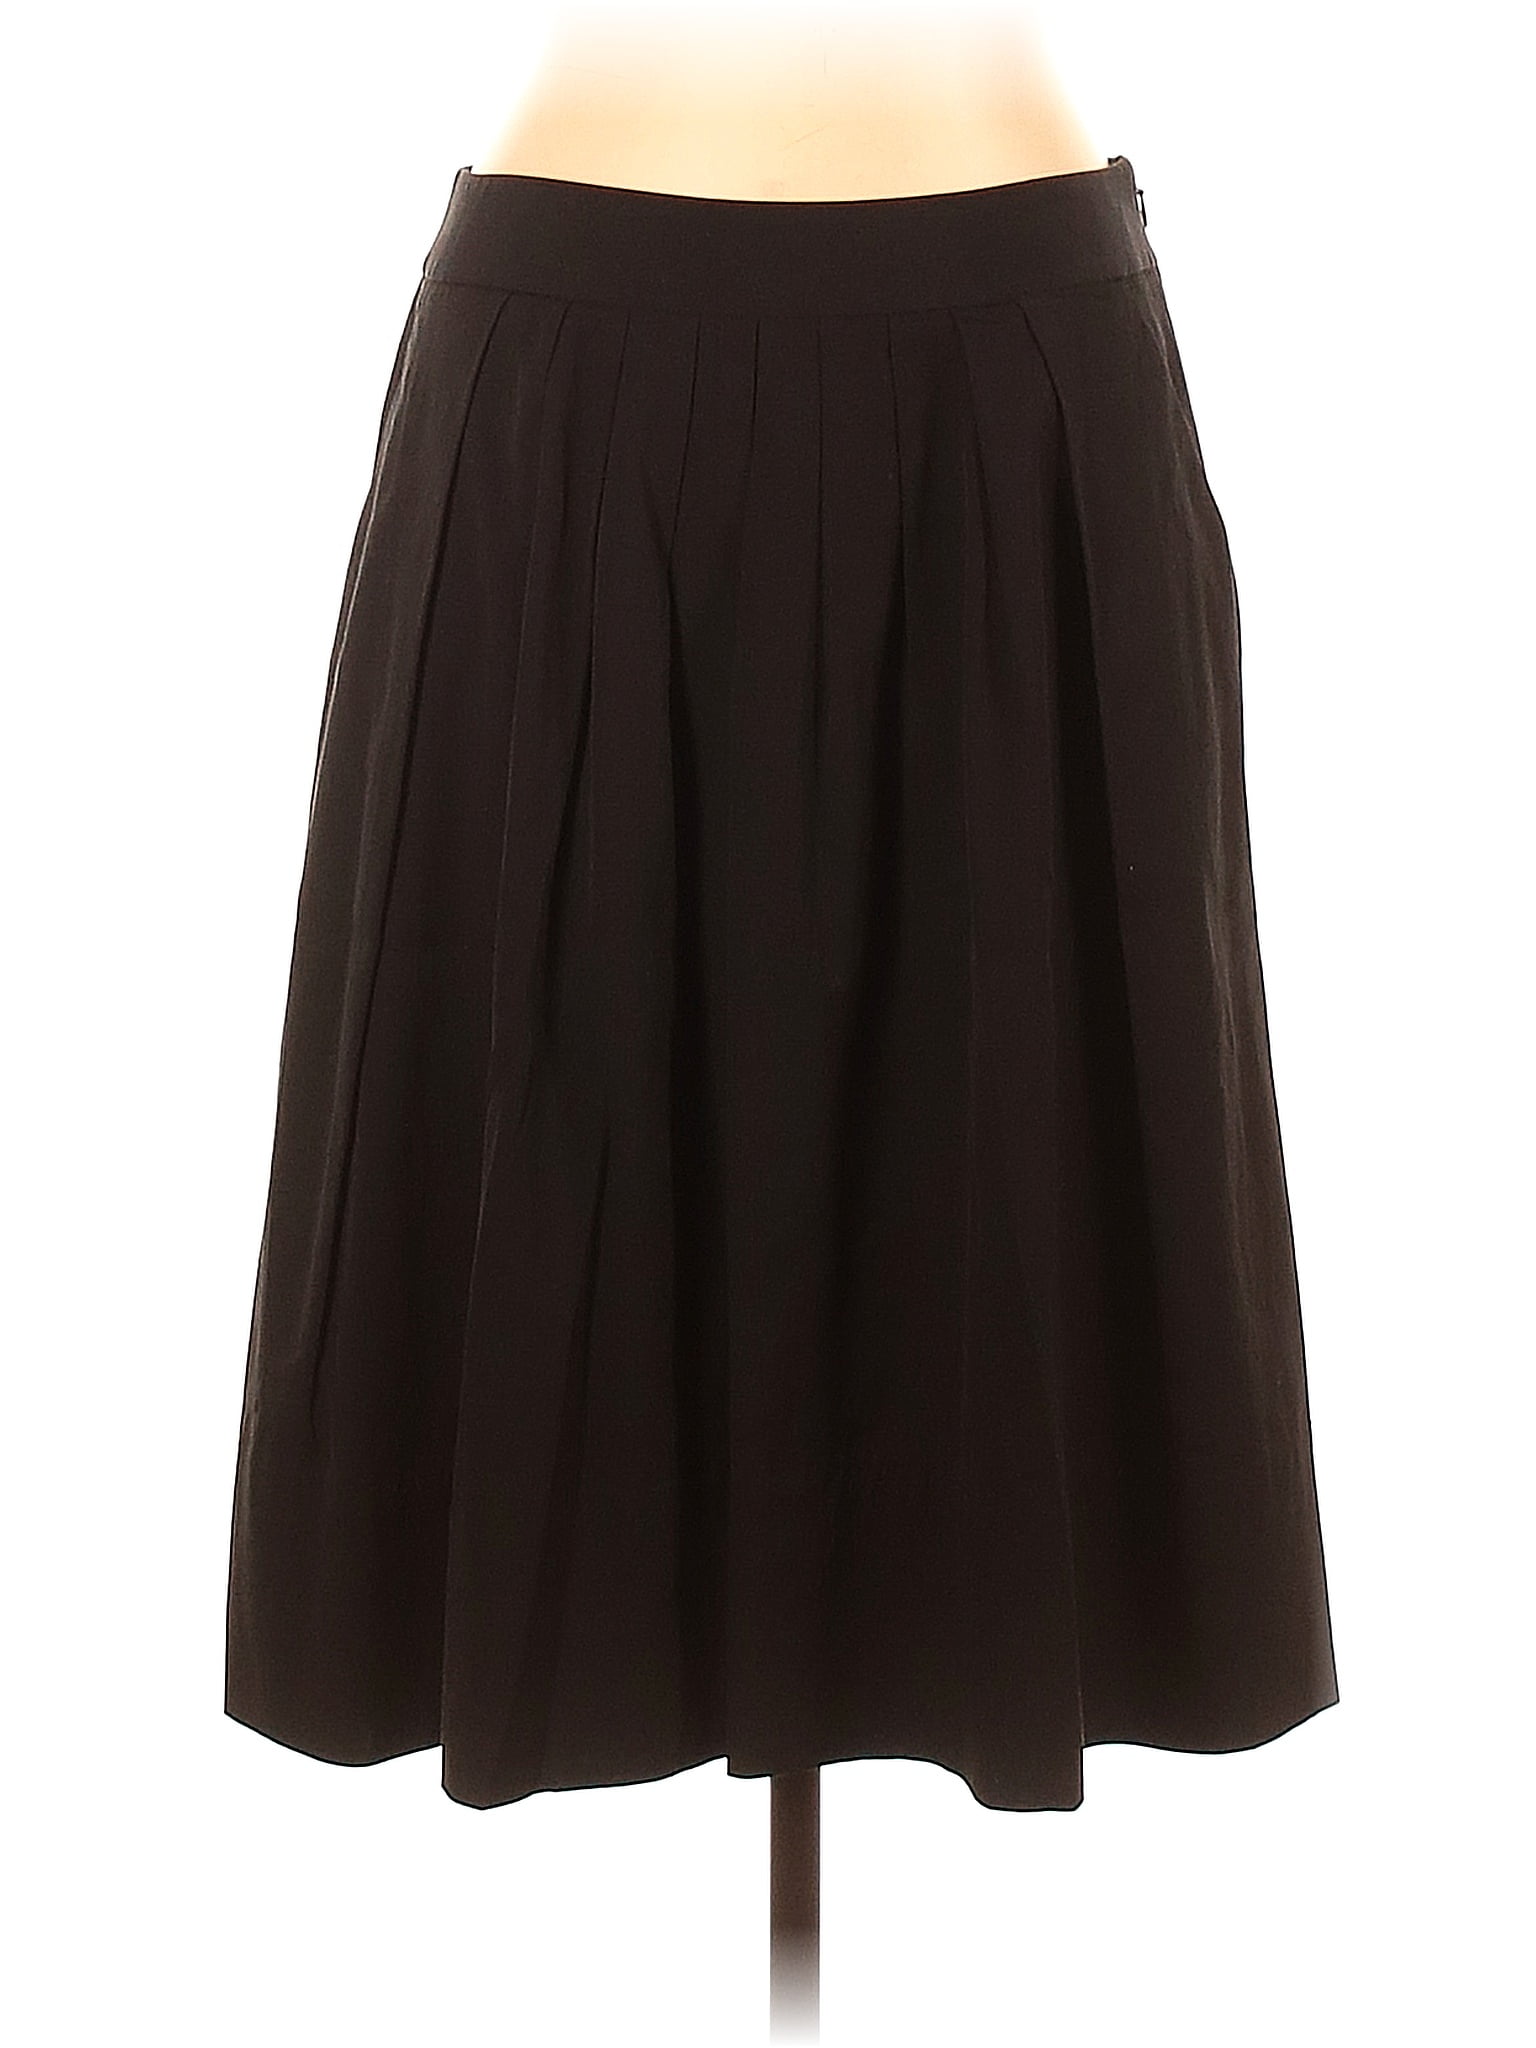 Talbots Black Casual Skirt Size 10 - 72% off | thredUP